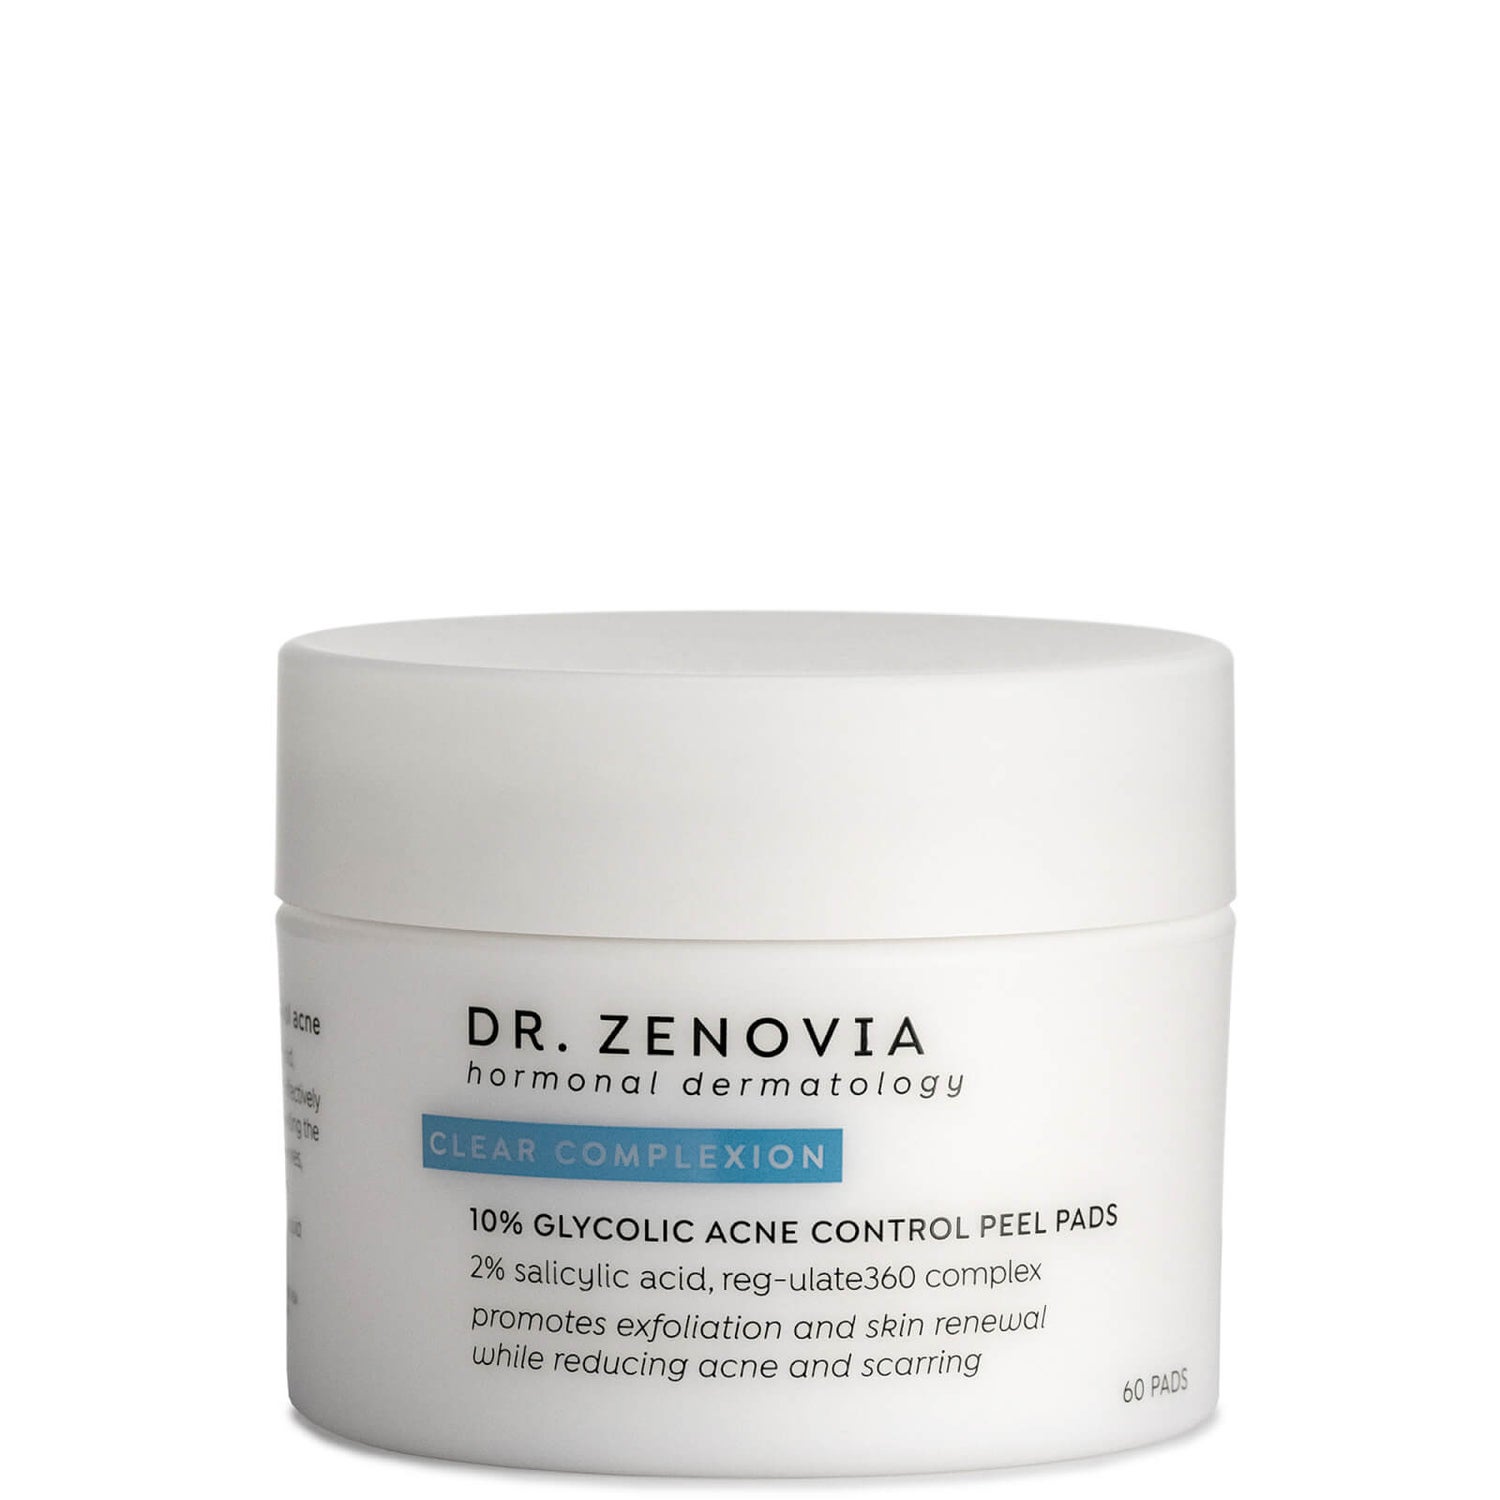 Dr. Zenovia 10% Glycolic Acne Peel Pads